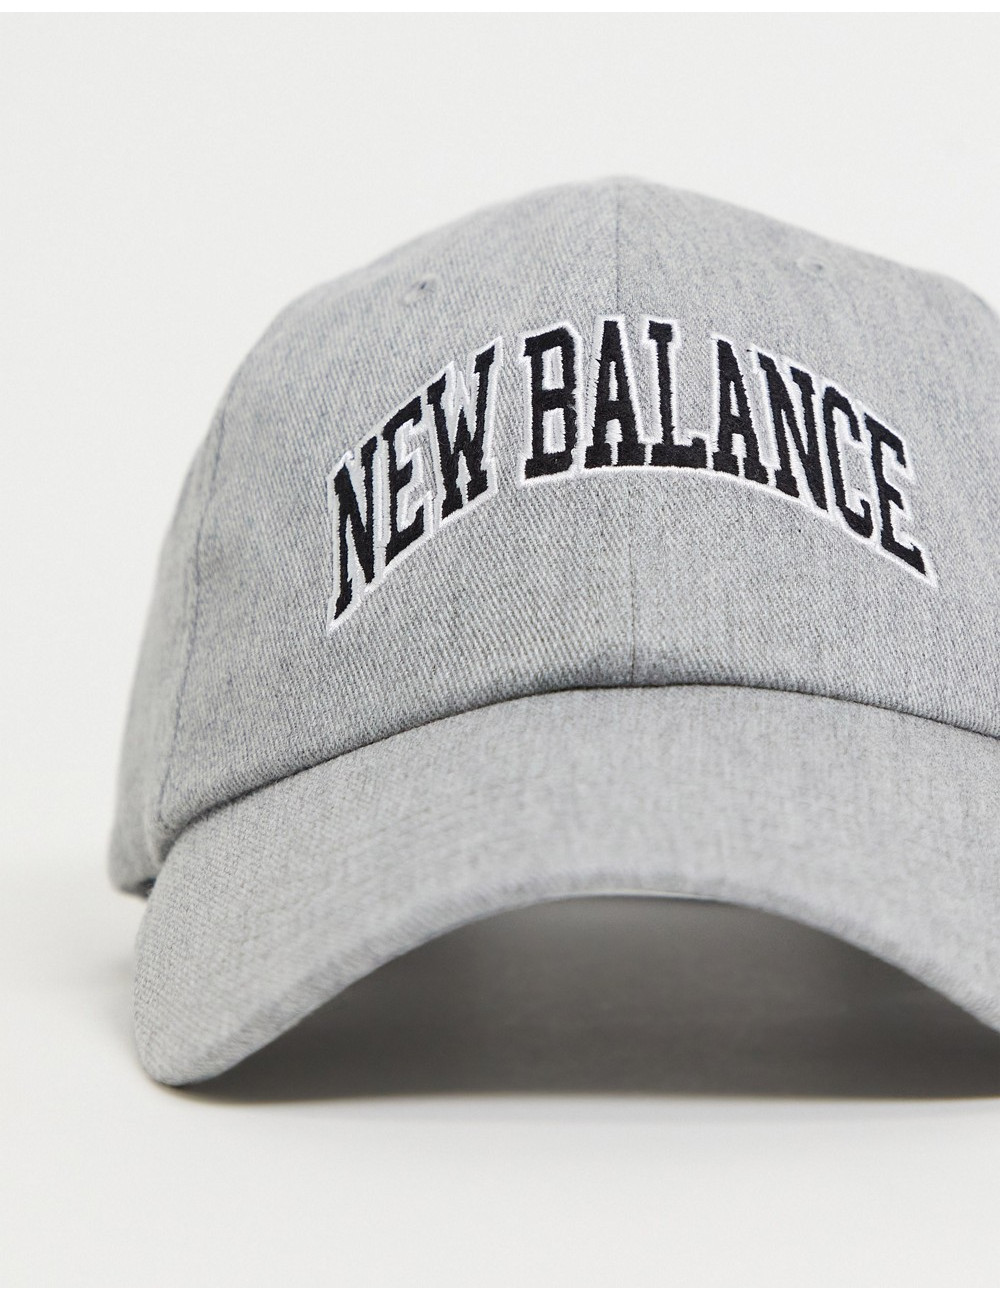 New Balance collegiate logo...